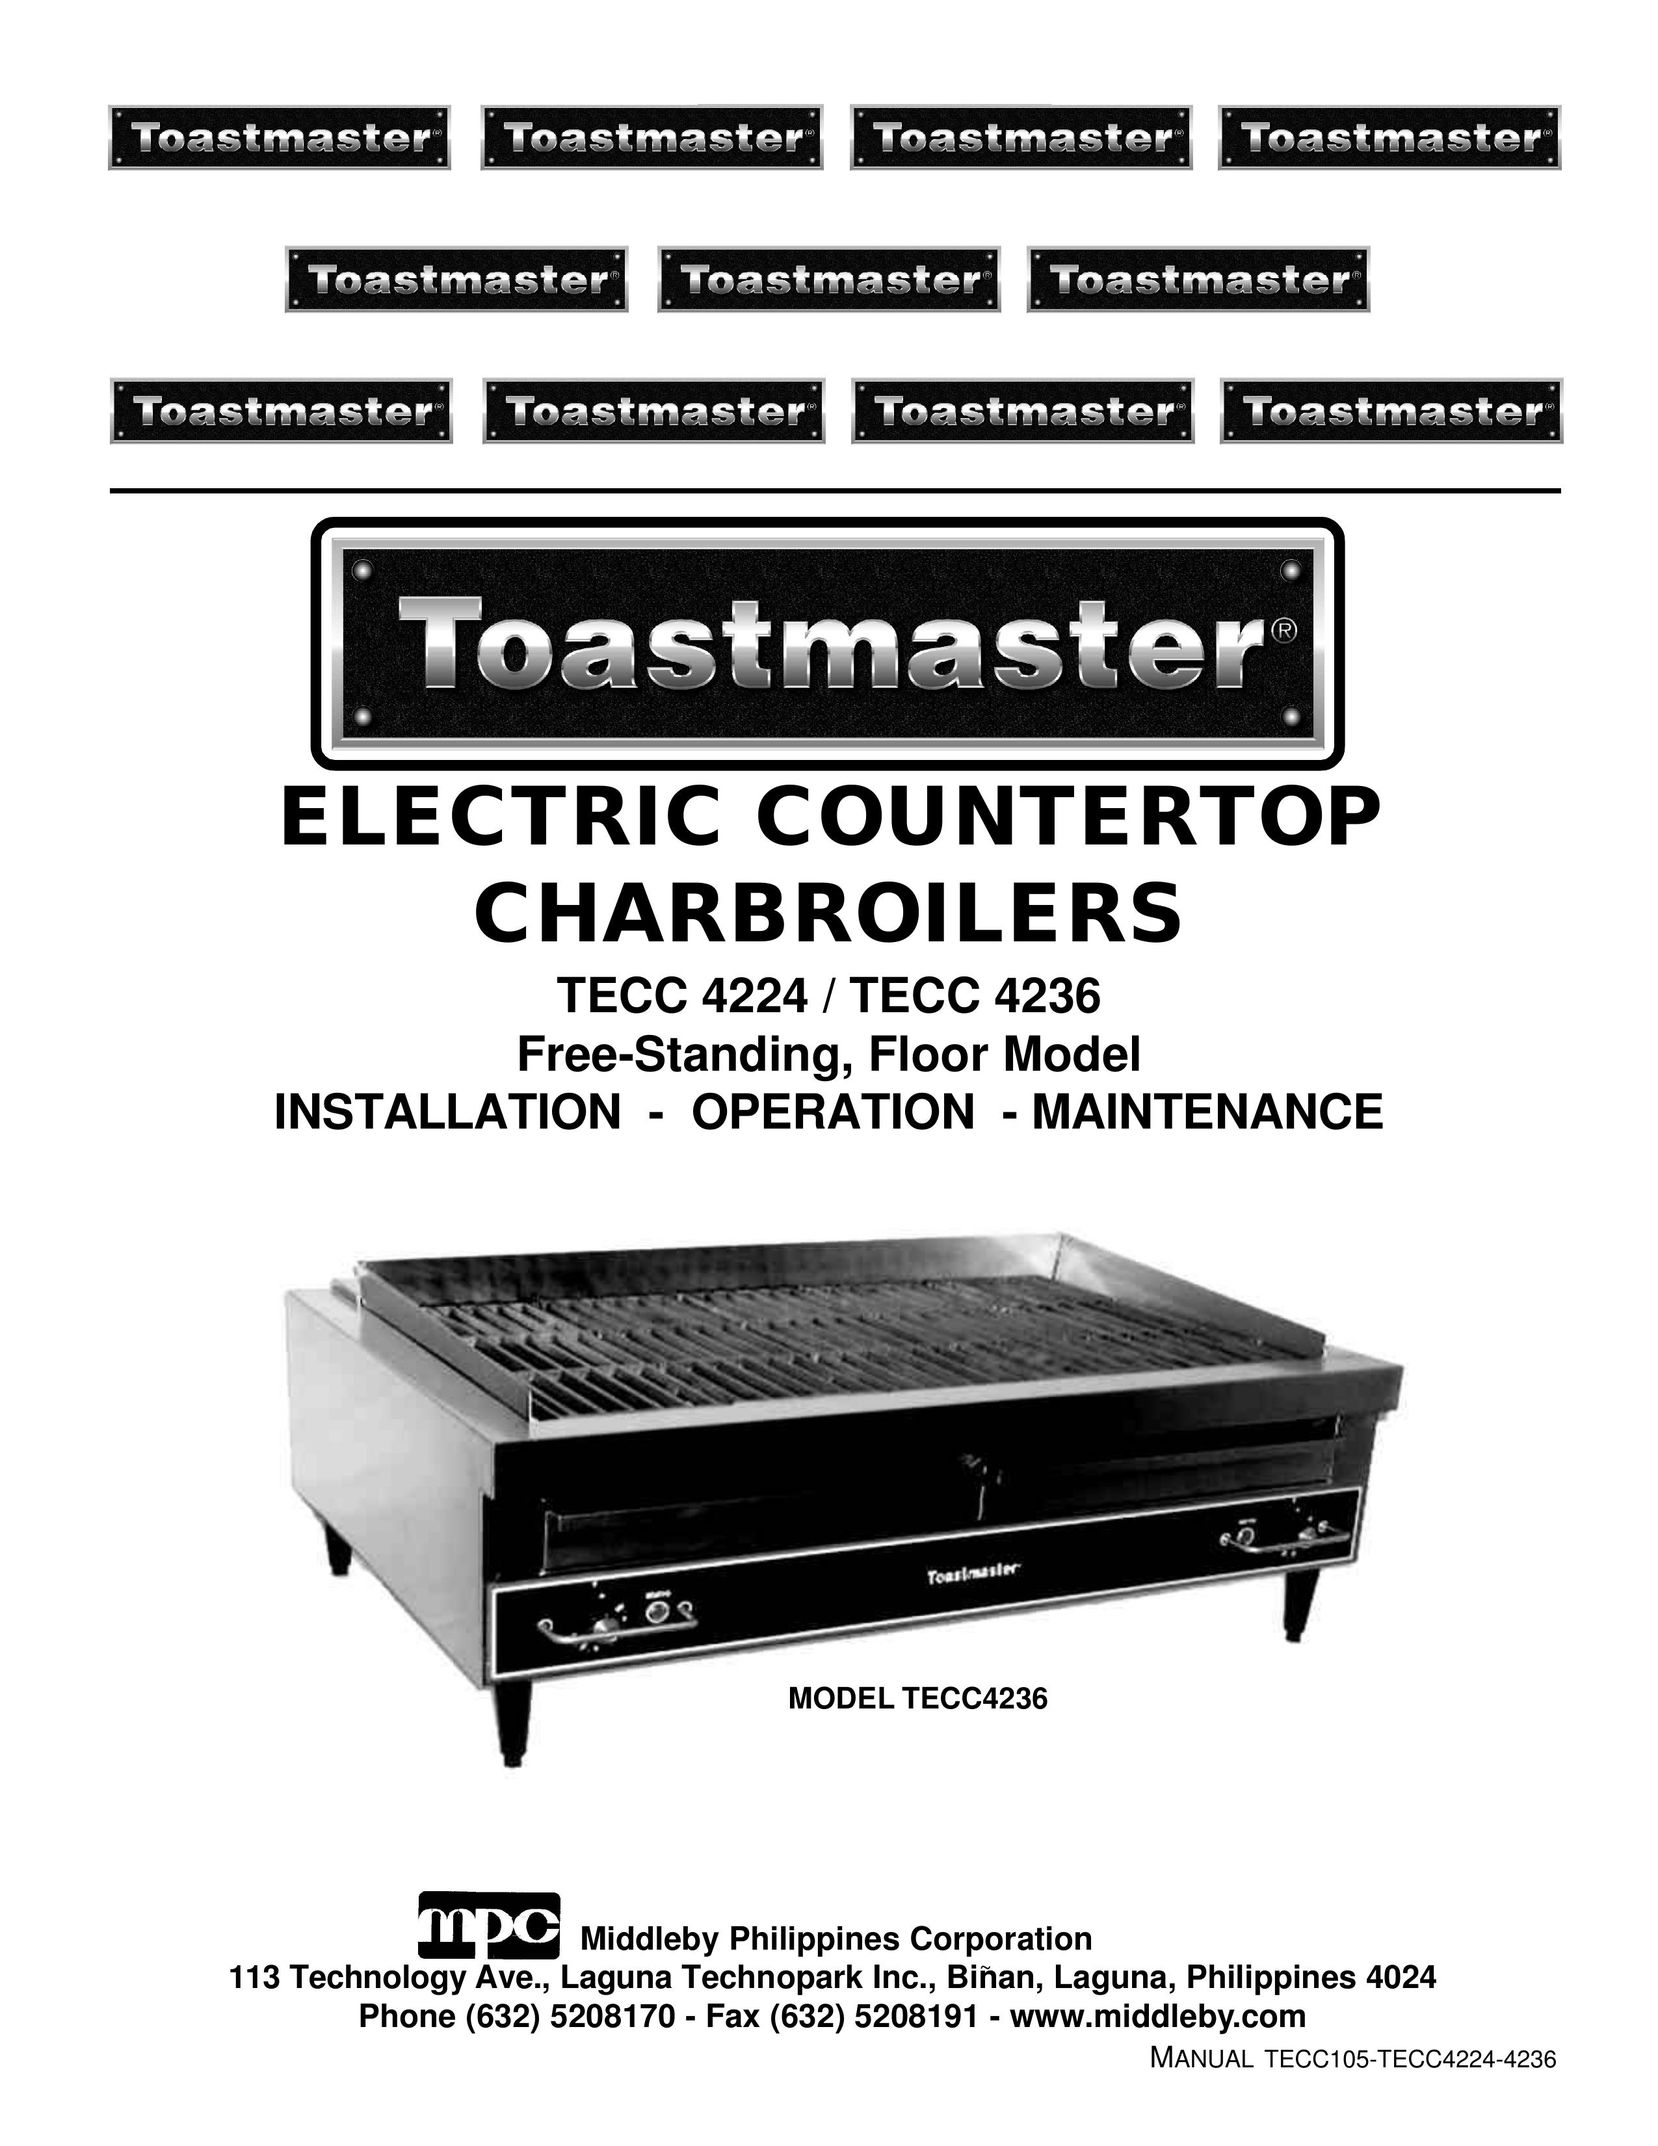 Toastmaster TECC 4224 Kitchen Grill User Manual